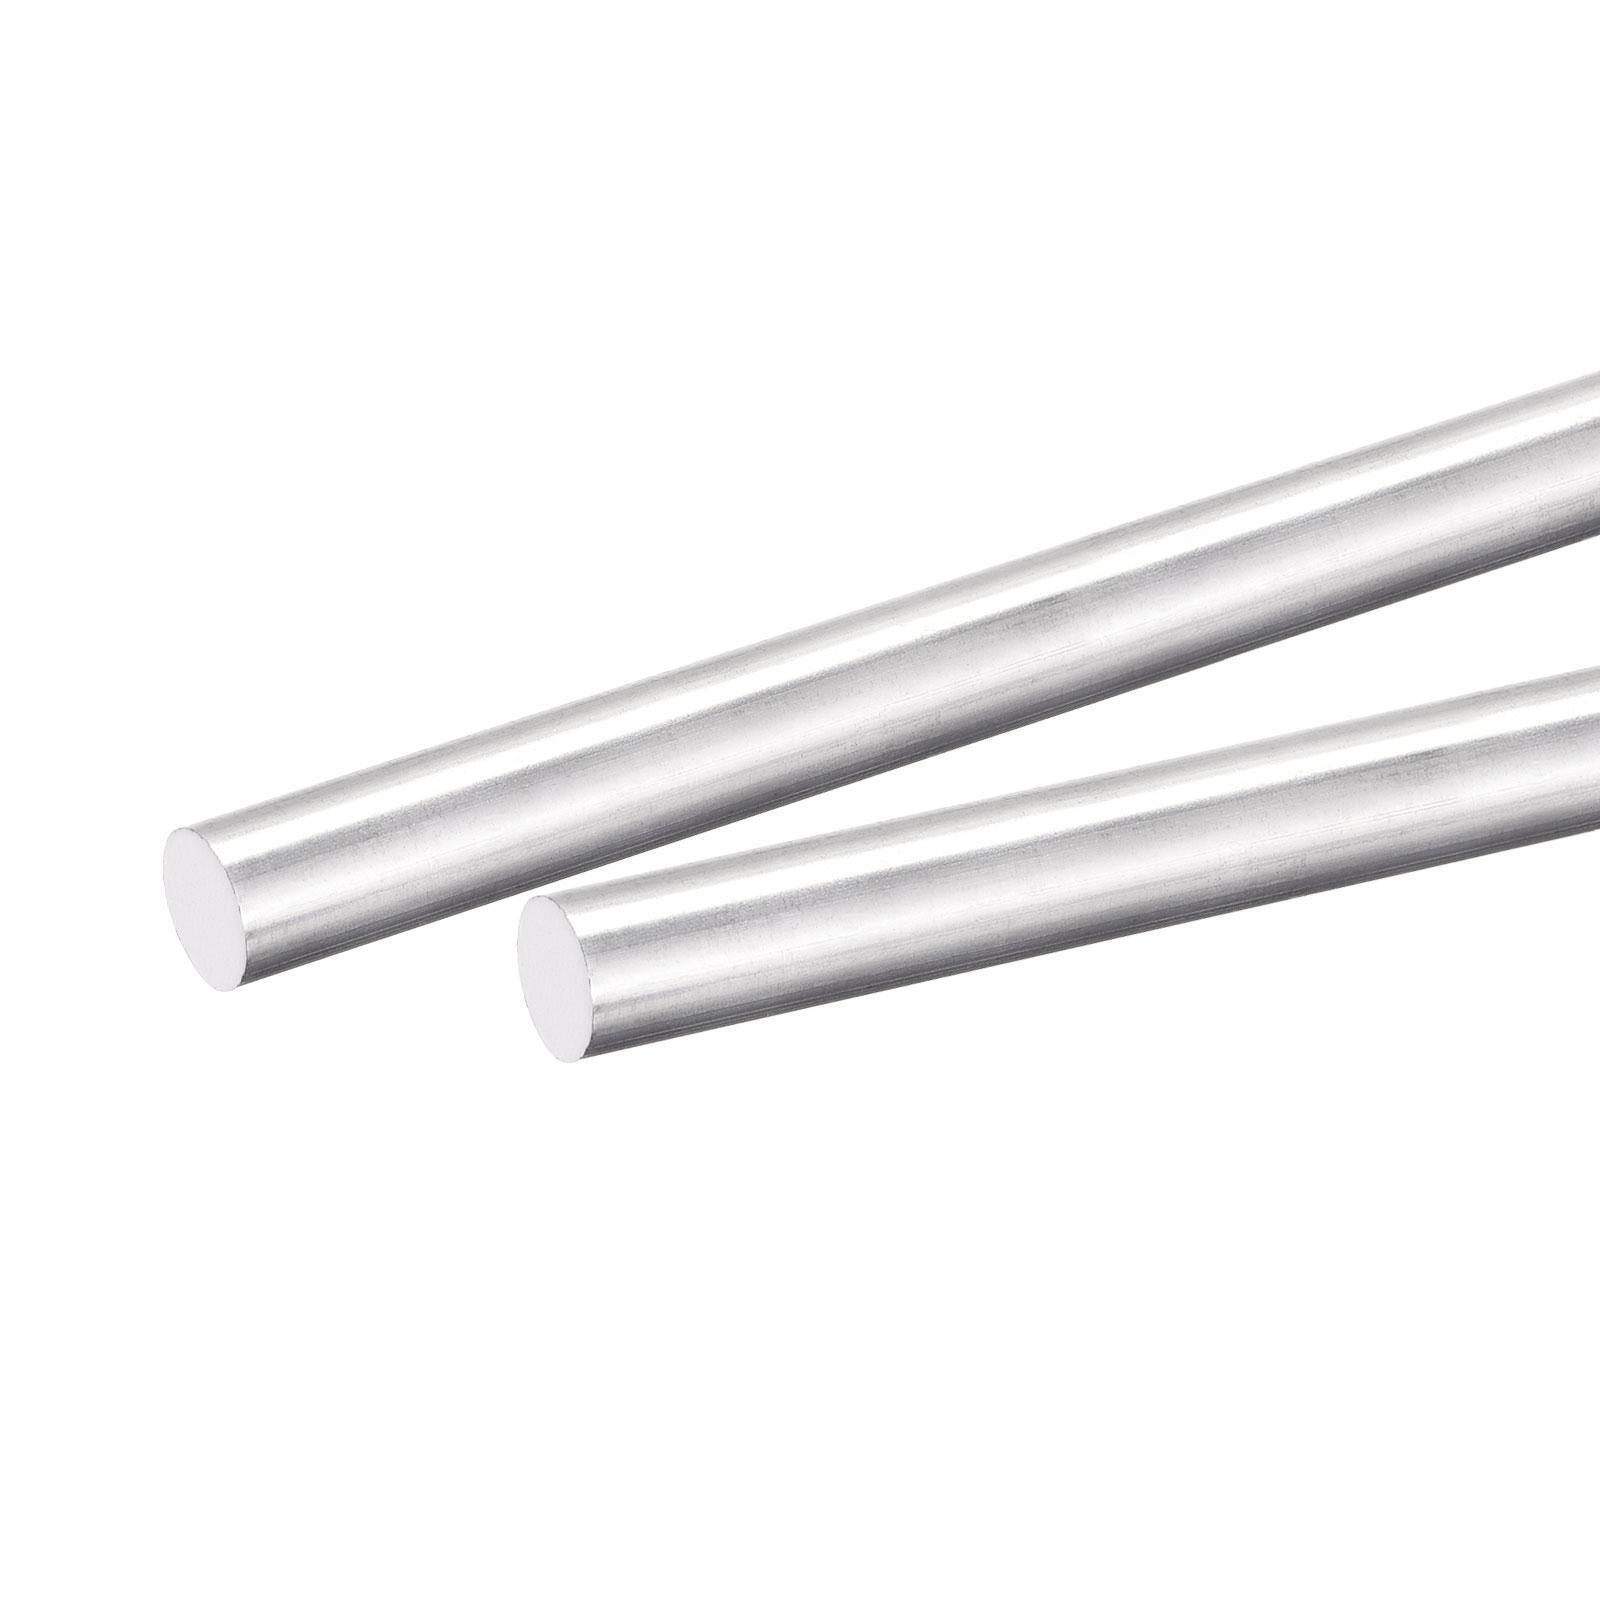 2pcs Aluminum Solid Round Rod 10mm Diameter 300mm Length Lathe Bar Stock